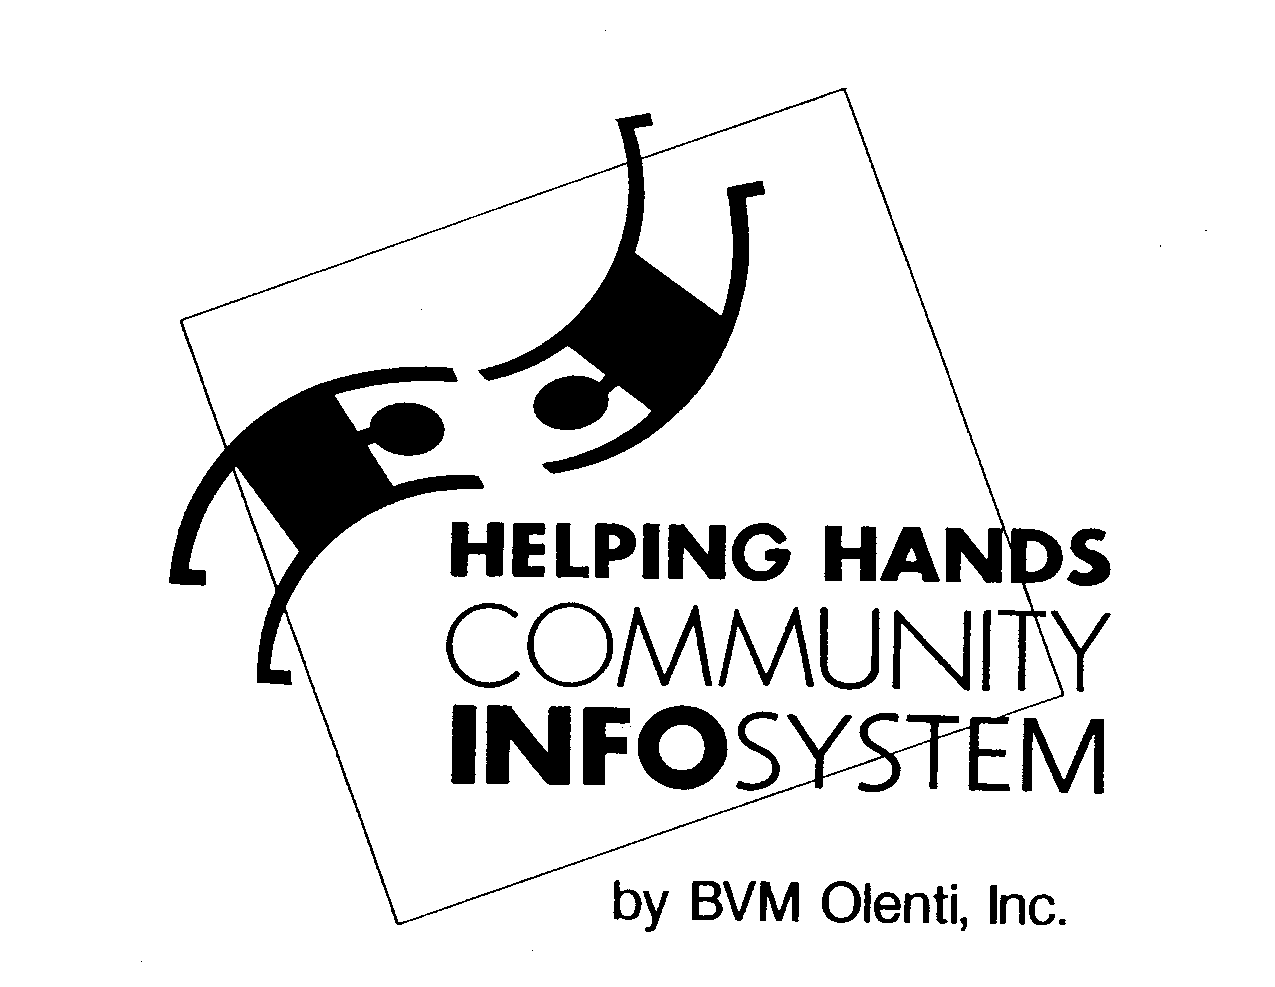  HELPING HANDS COMMUNITY INFOSYSTEM